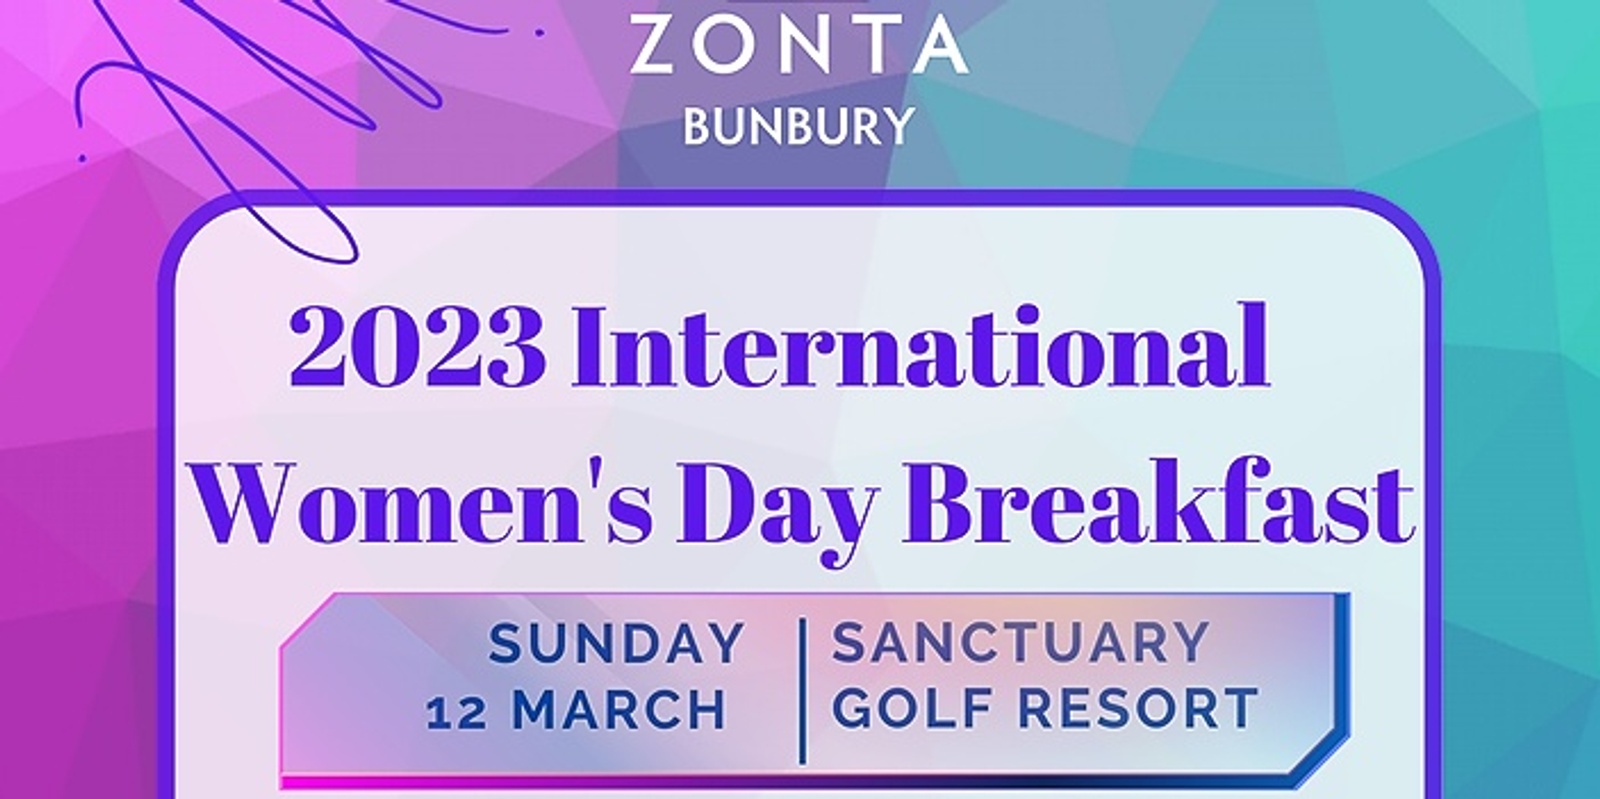 Banner image for Zonta Bunbury 2023 International Women's Day Breakfast